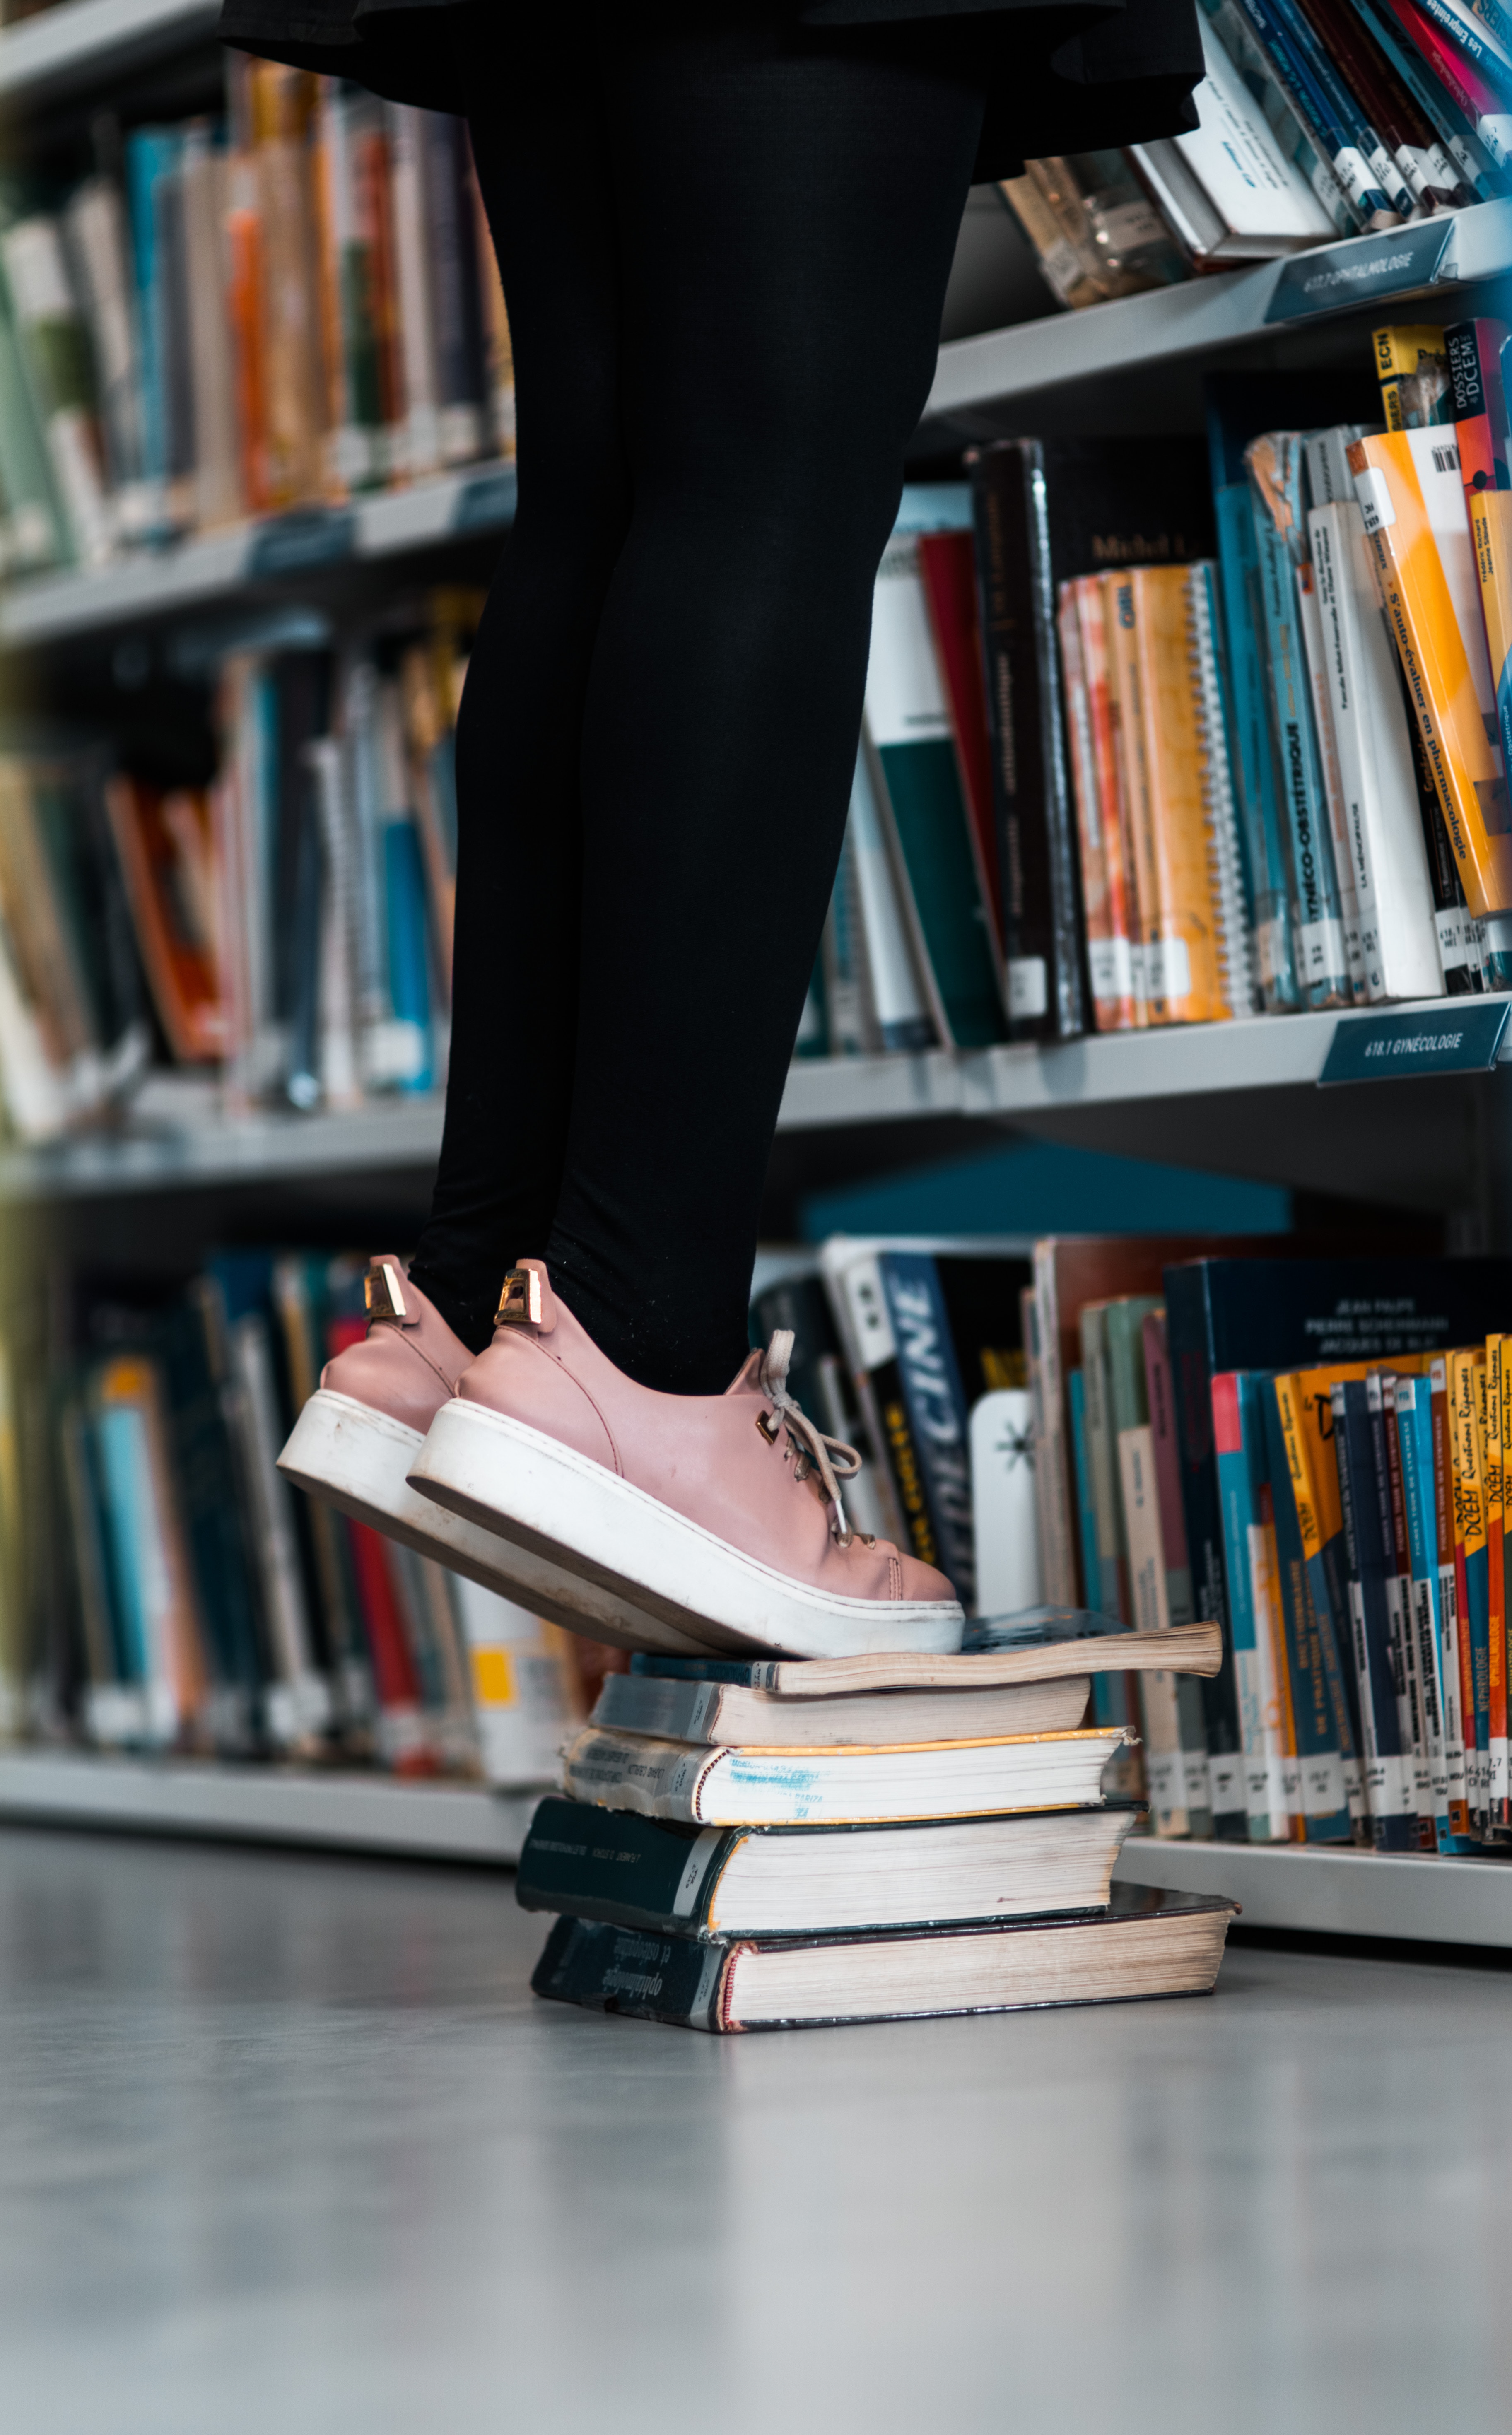 library, books, miscellanea, miscellaneous, legs, sneakers, bookshelves Full HD